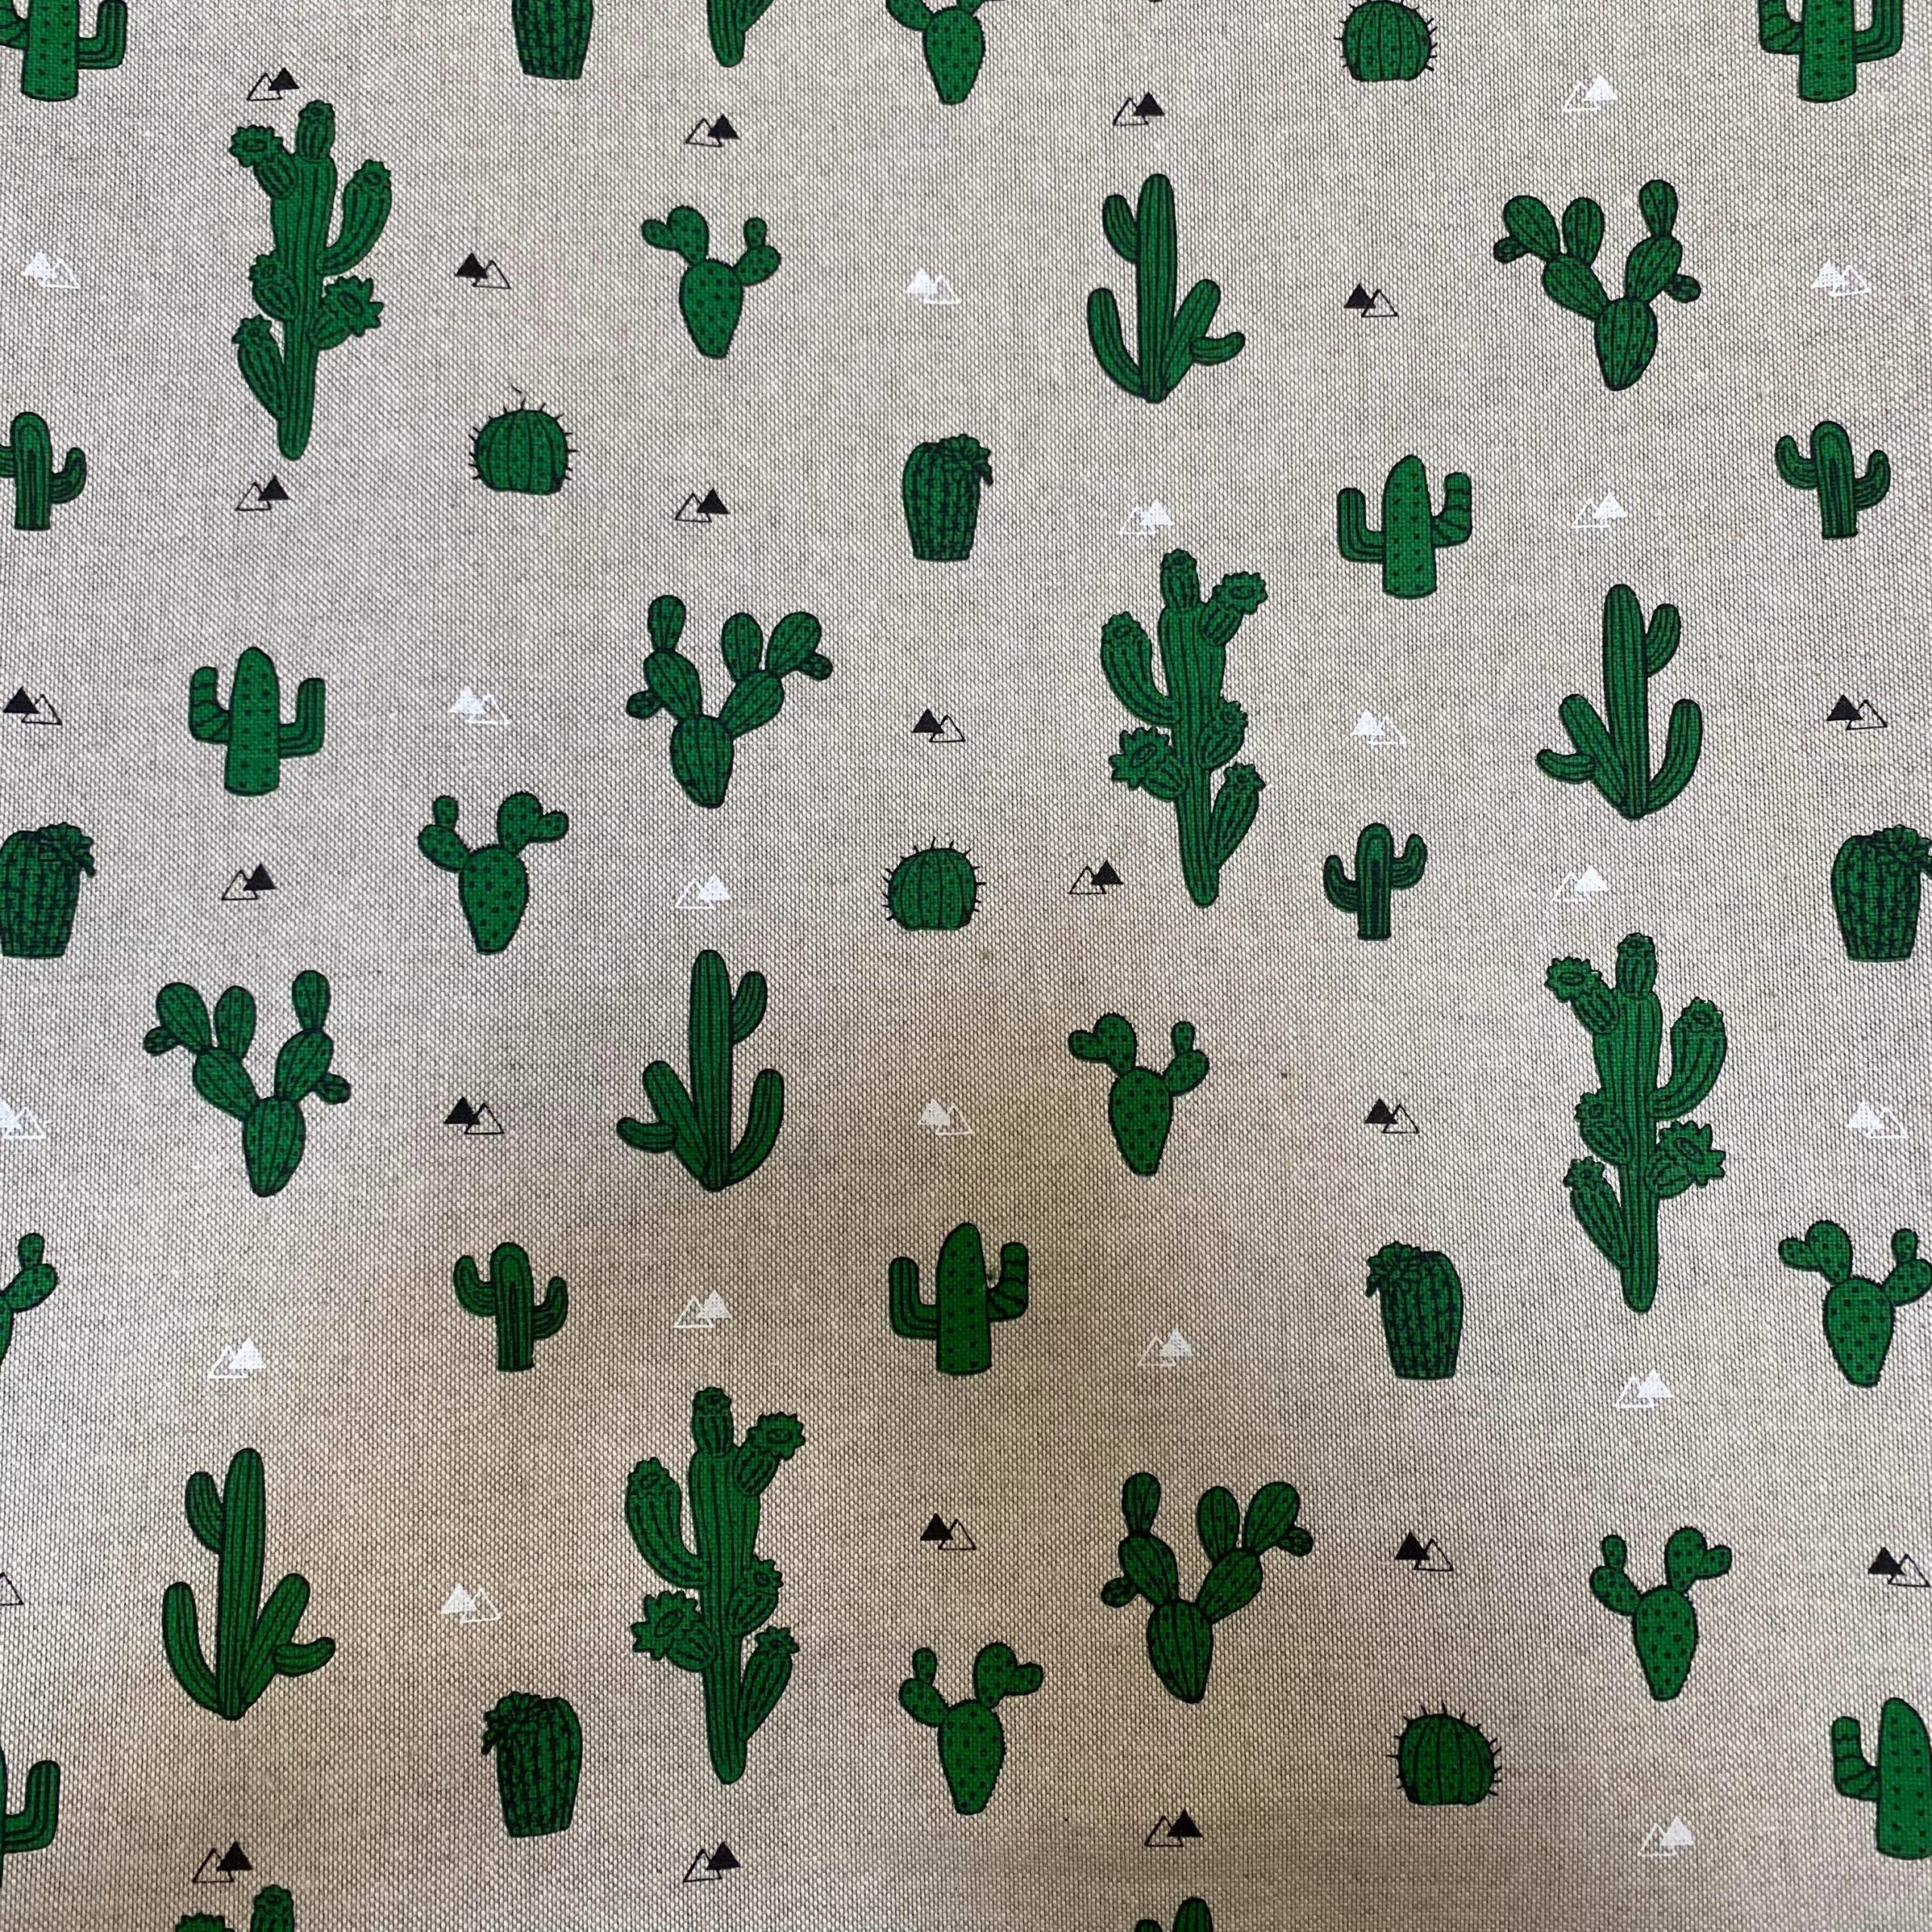 tissu aspect lin cactus